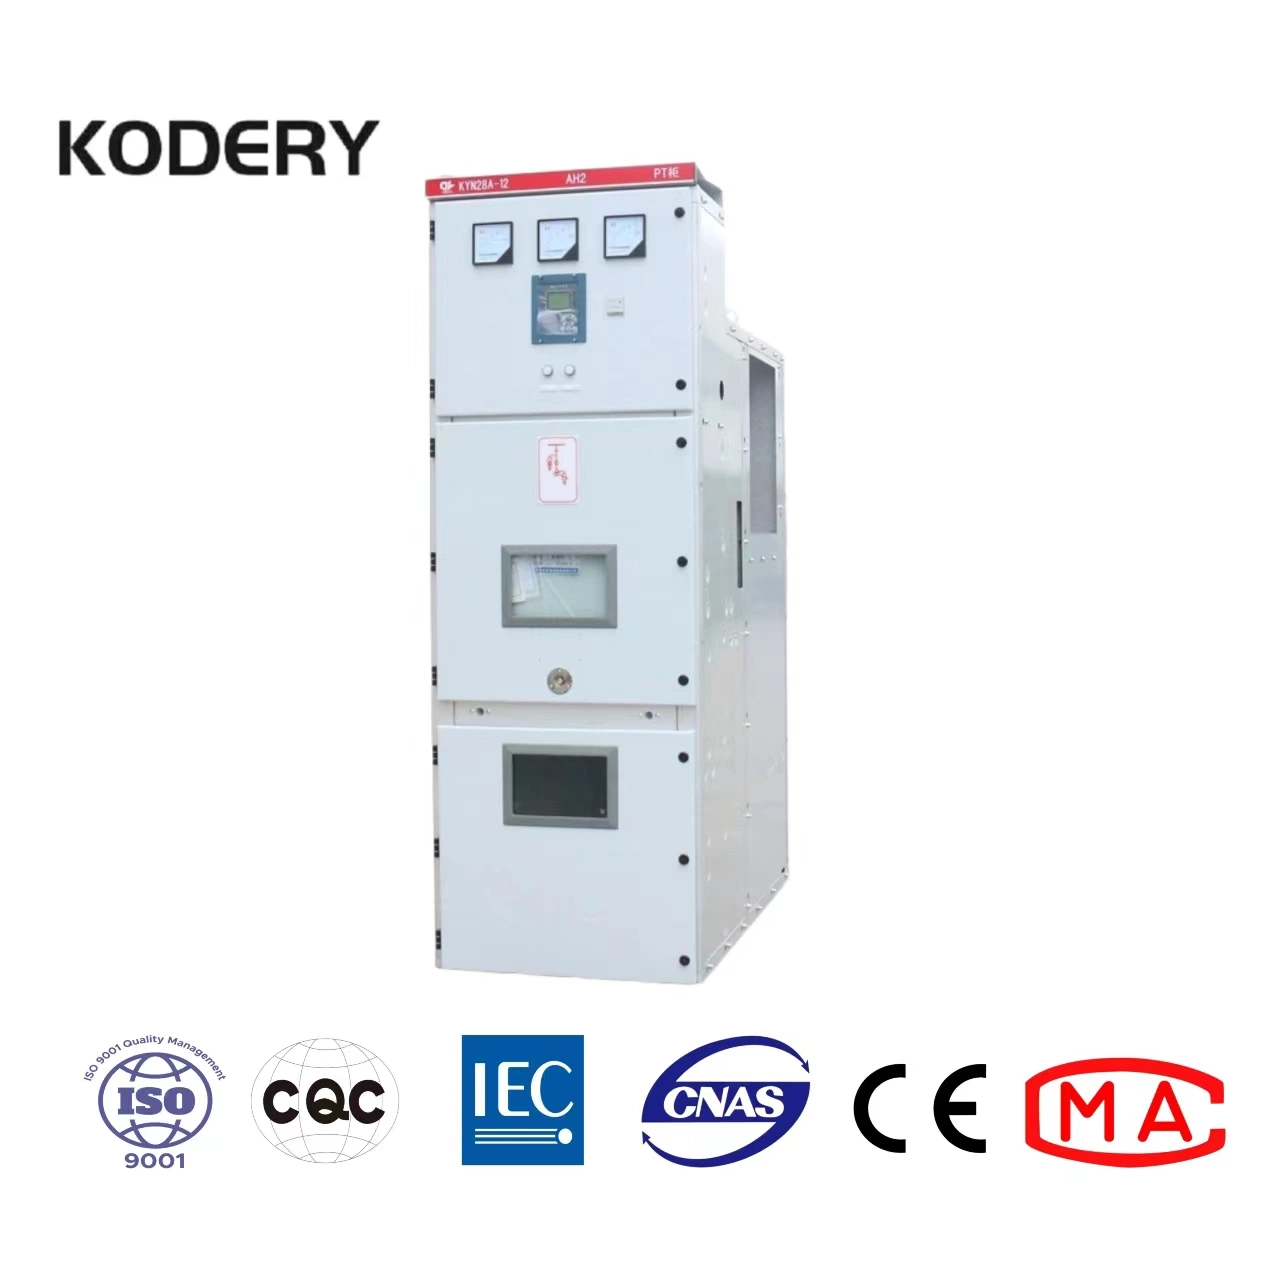 Kodery Kyn28-12 11kv Withdrawout Metal Clad and Metal Enclosed Switchgear for Vacuum Circuit Breaker